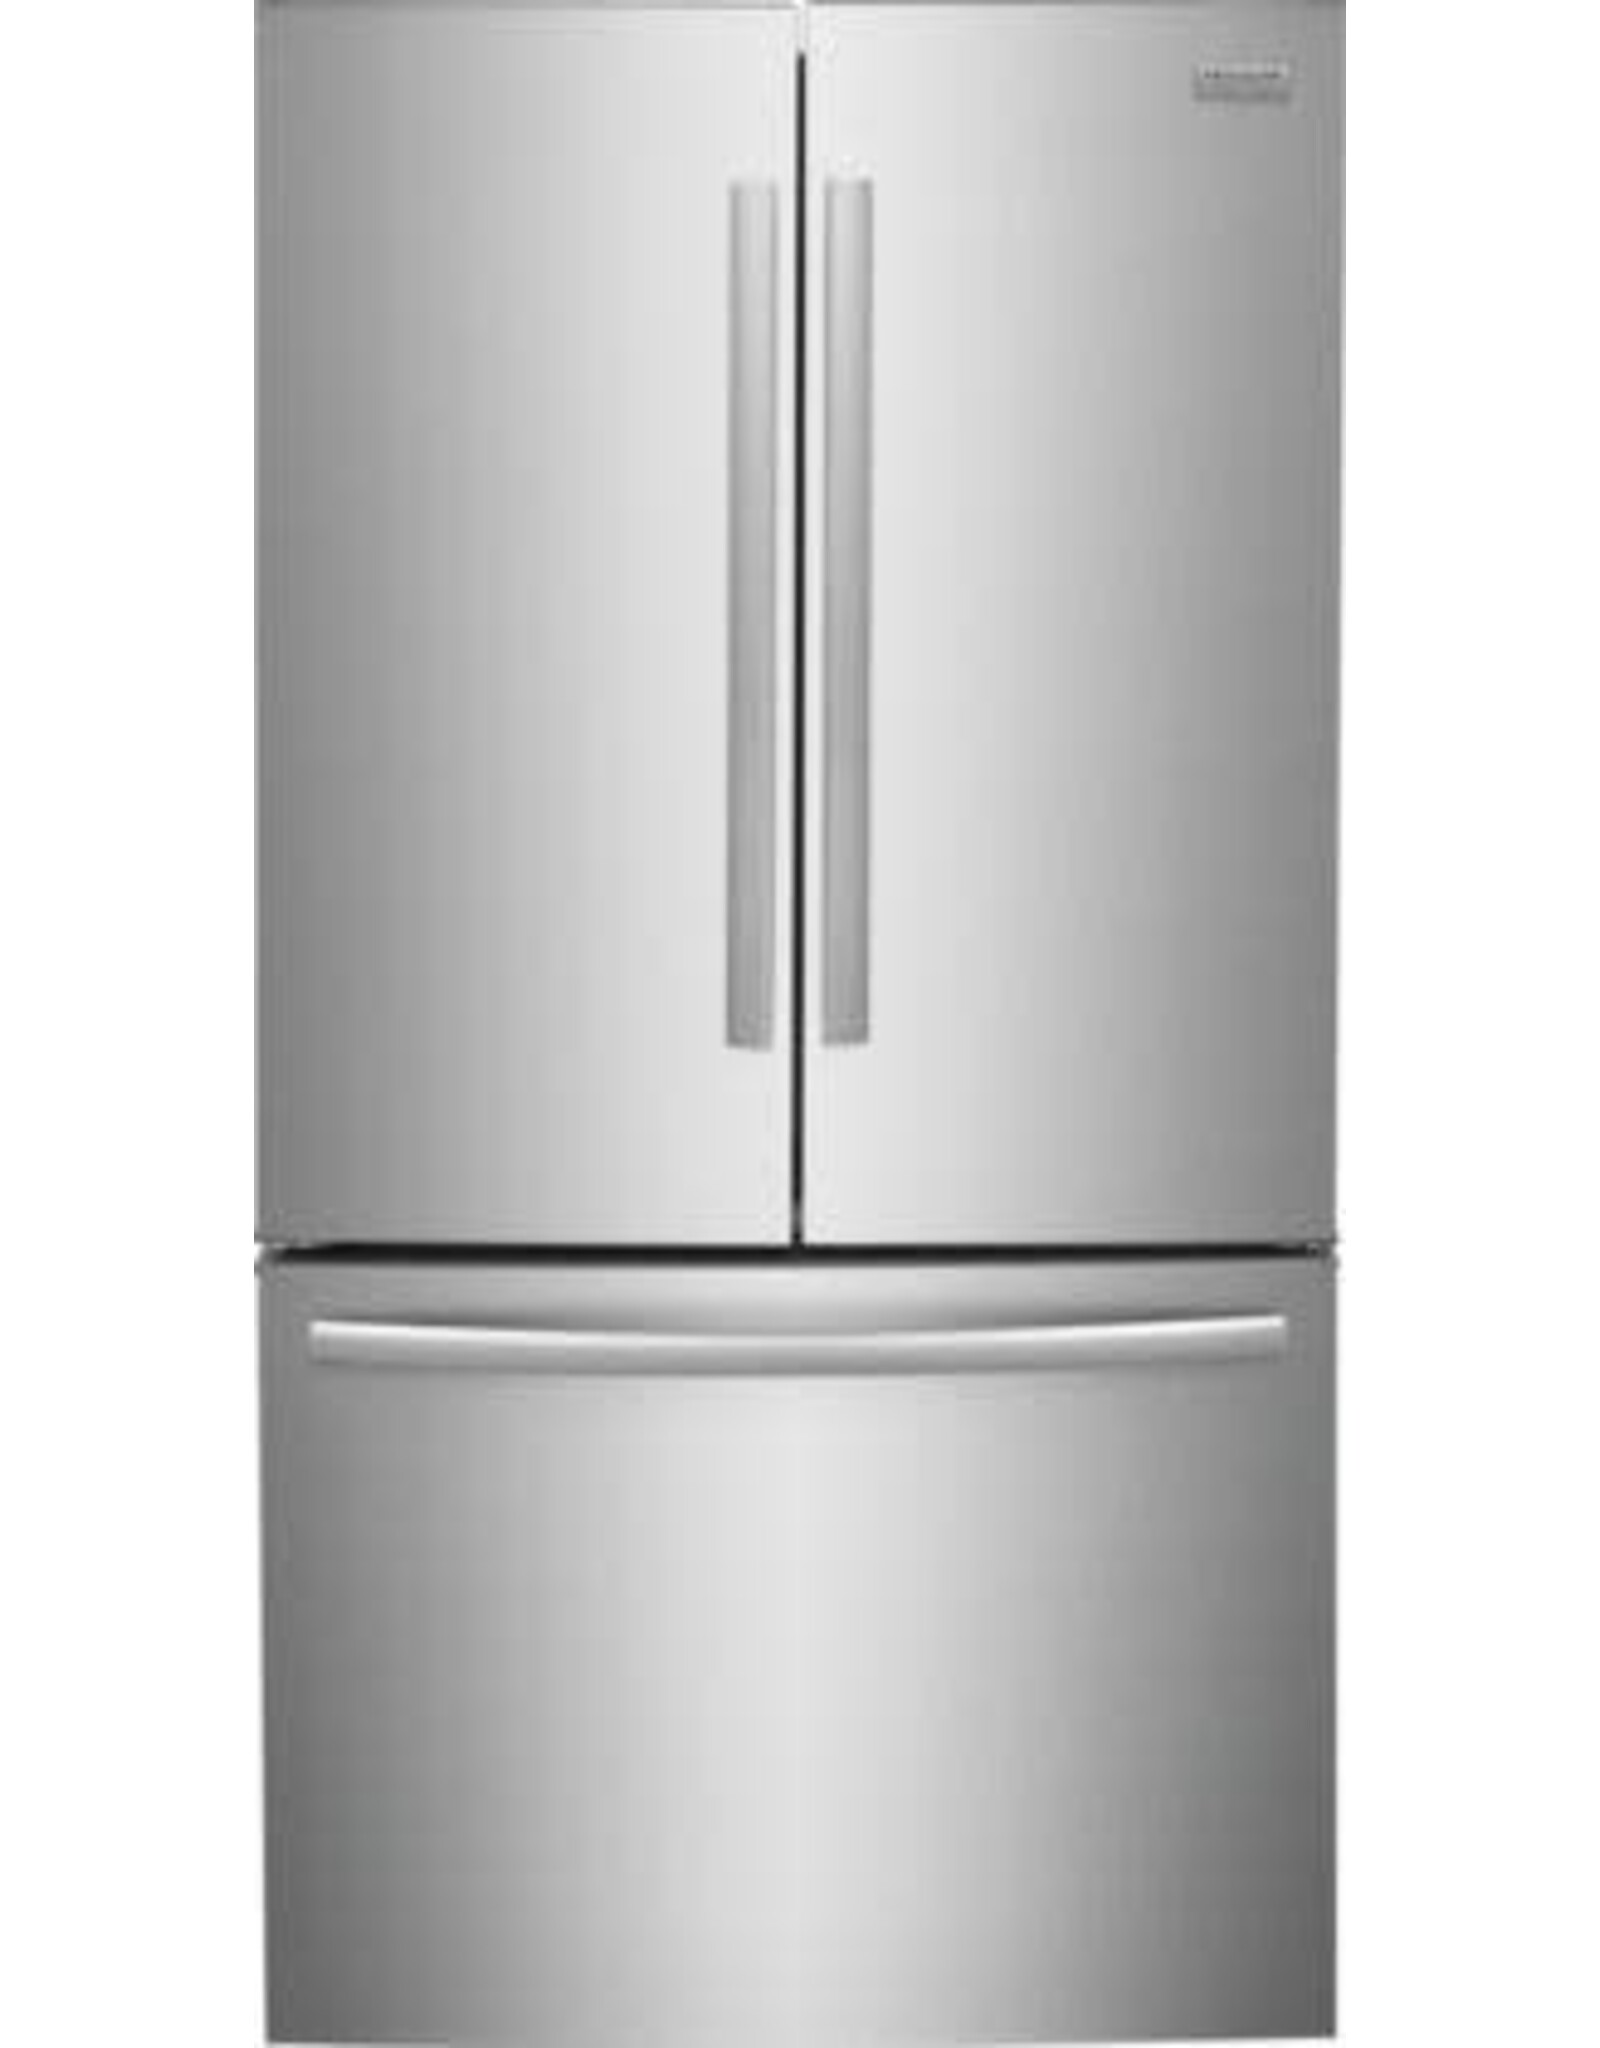 GRFN2853AF 28.8 cu. ft. French Door Refrigerator in Stainless Steel